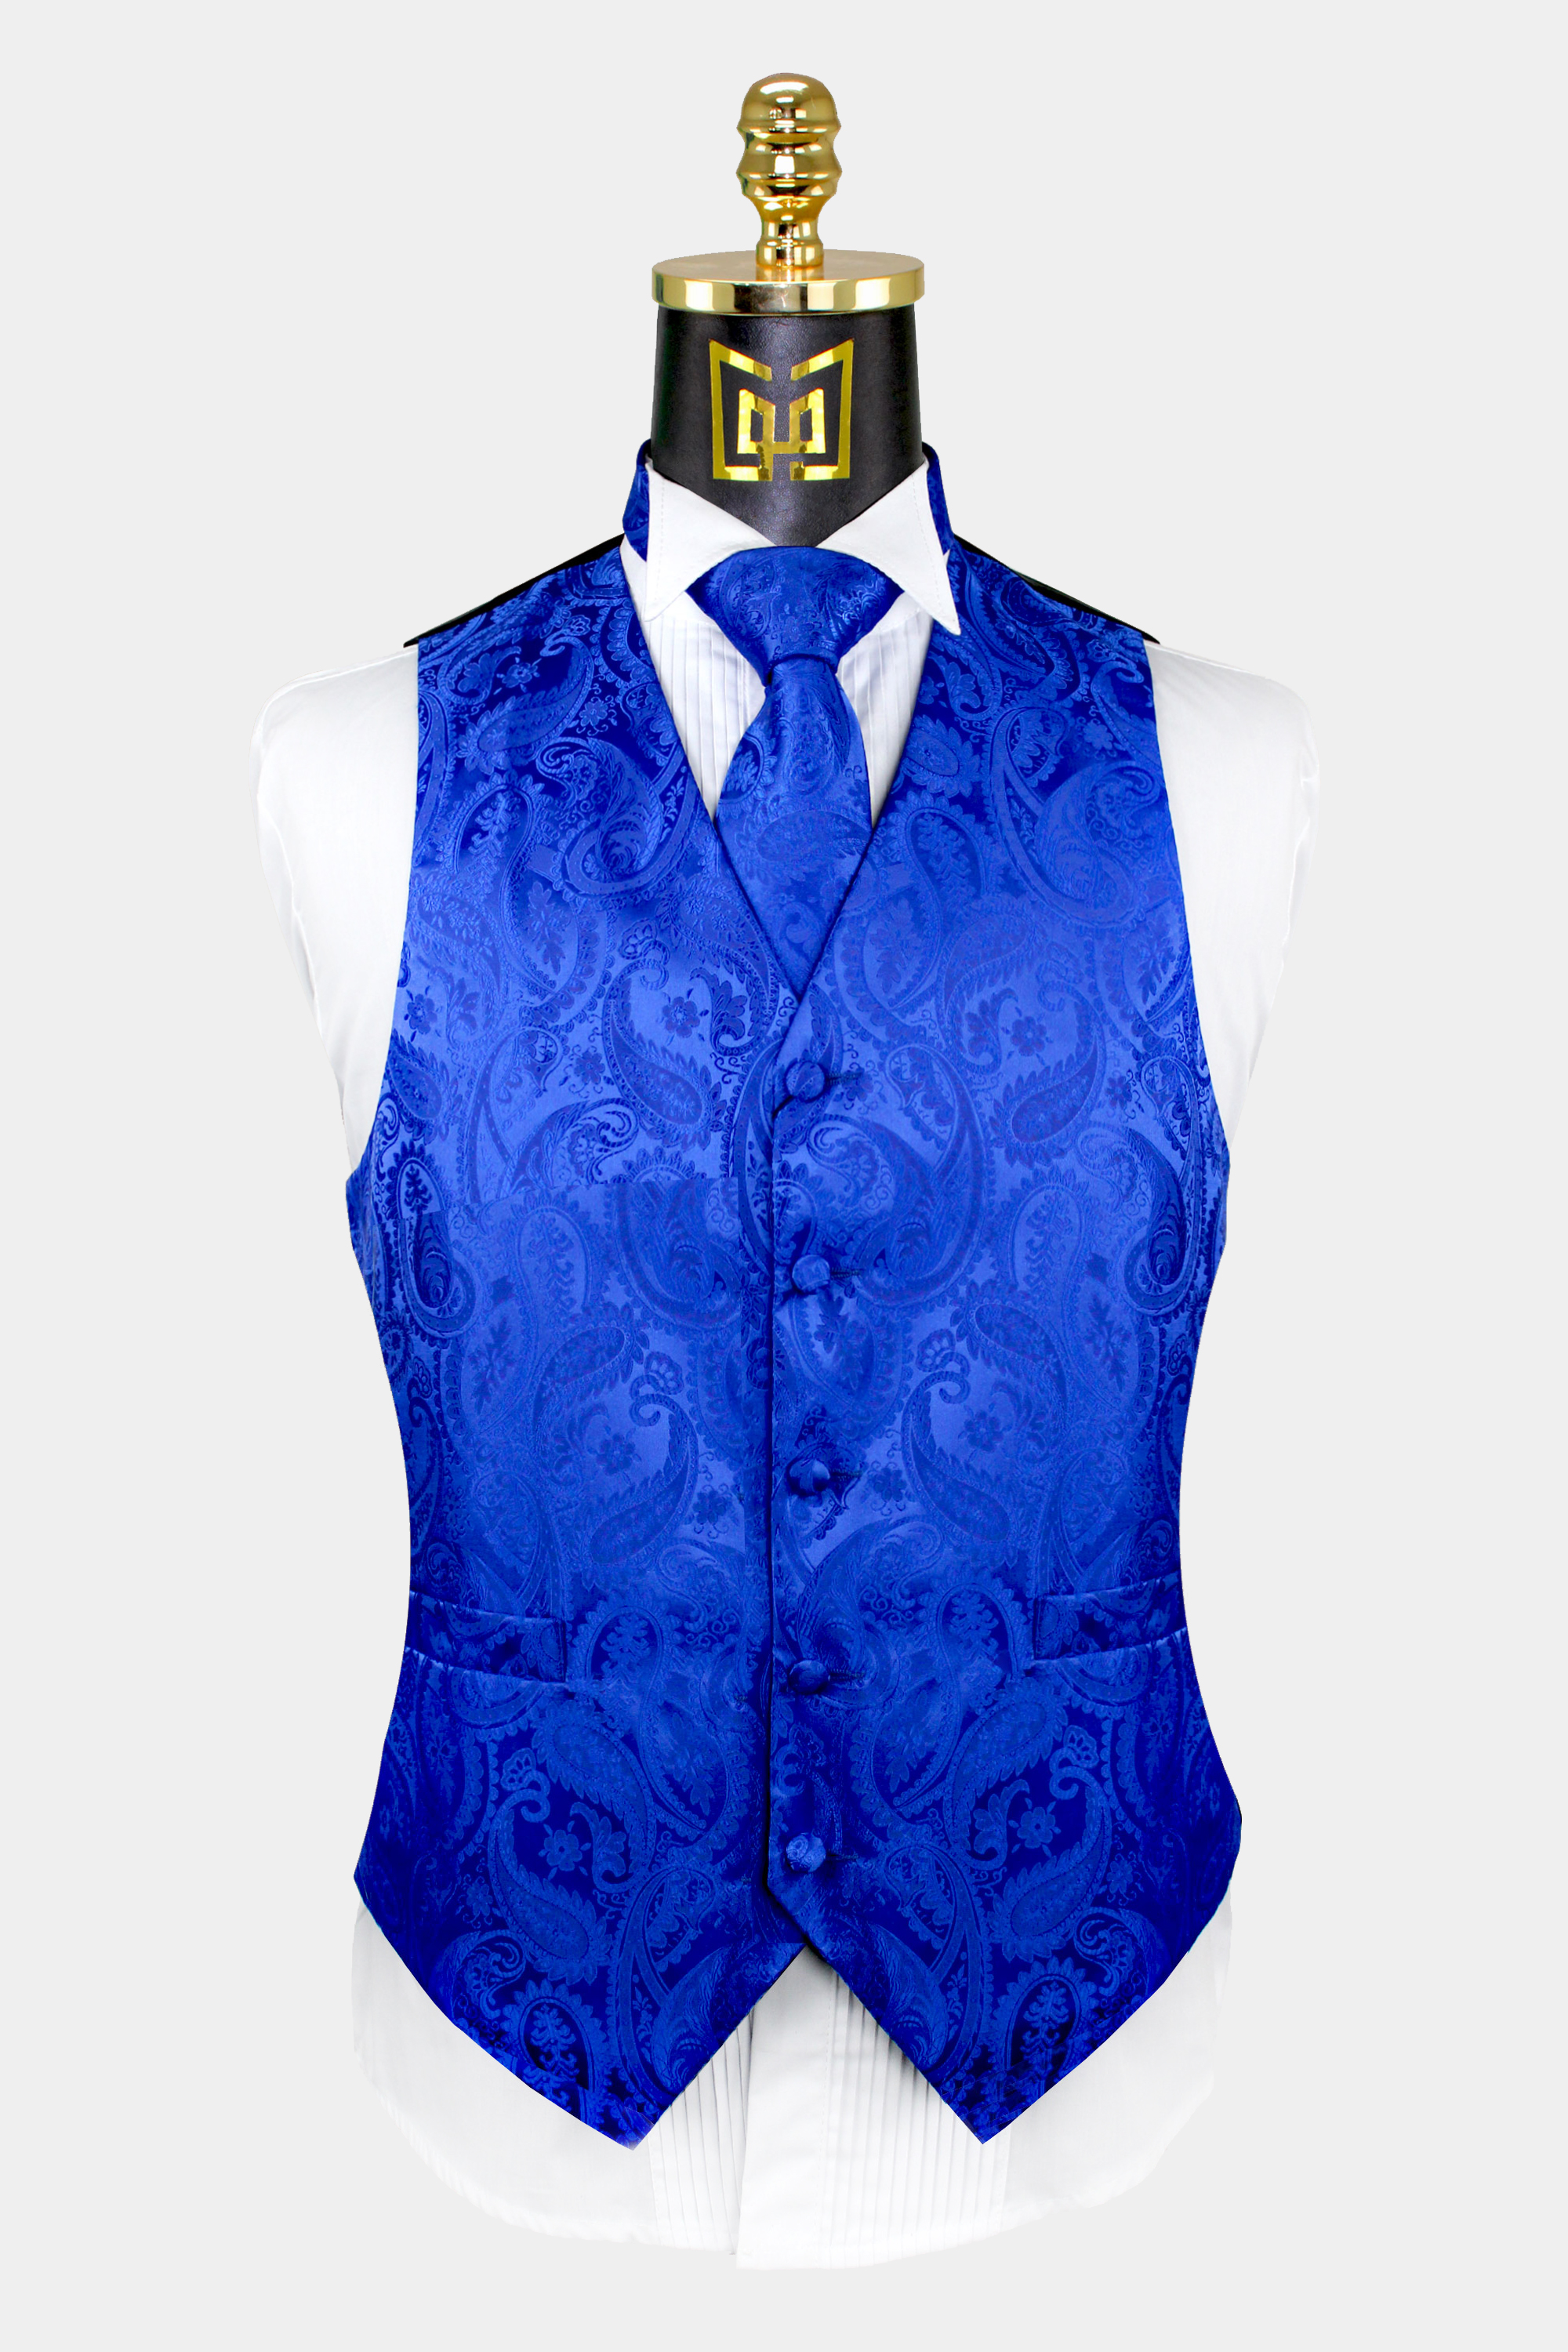 royal blue tie and vest